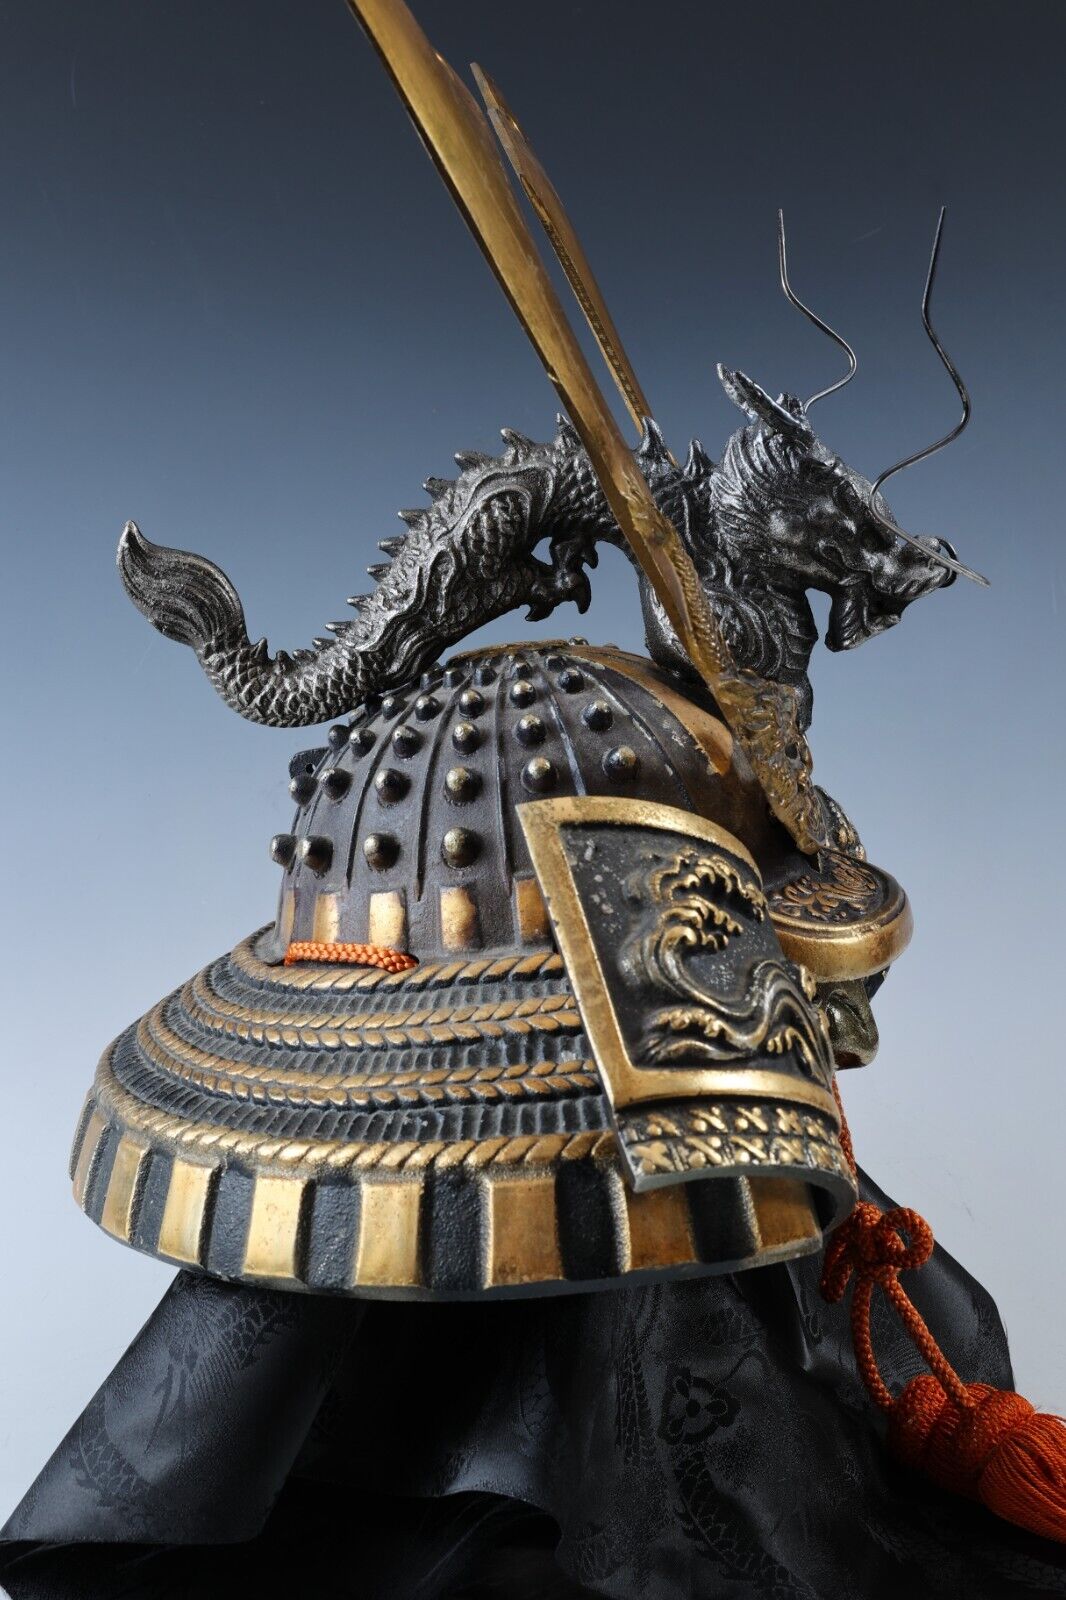 Vintage Samurai Kabuto Helmet - Dragon Japanese Helmet with a Mask